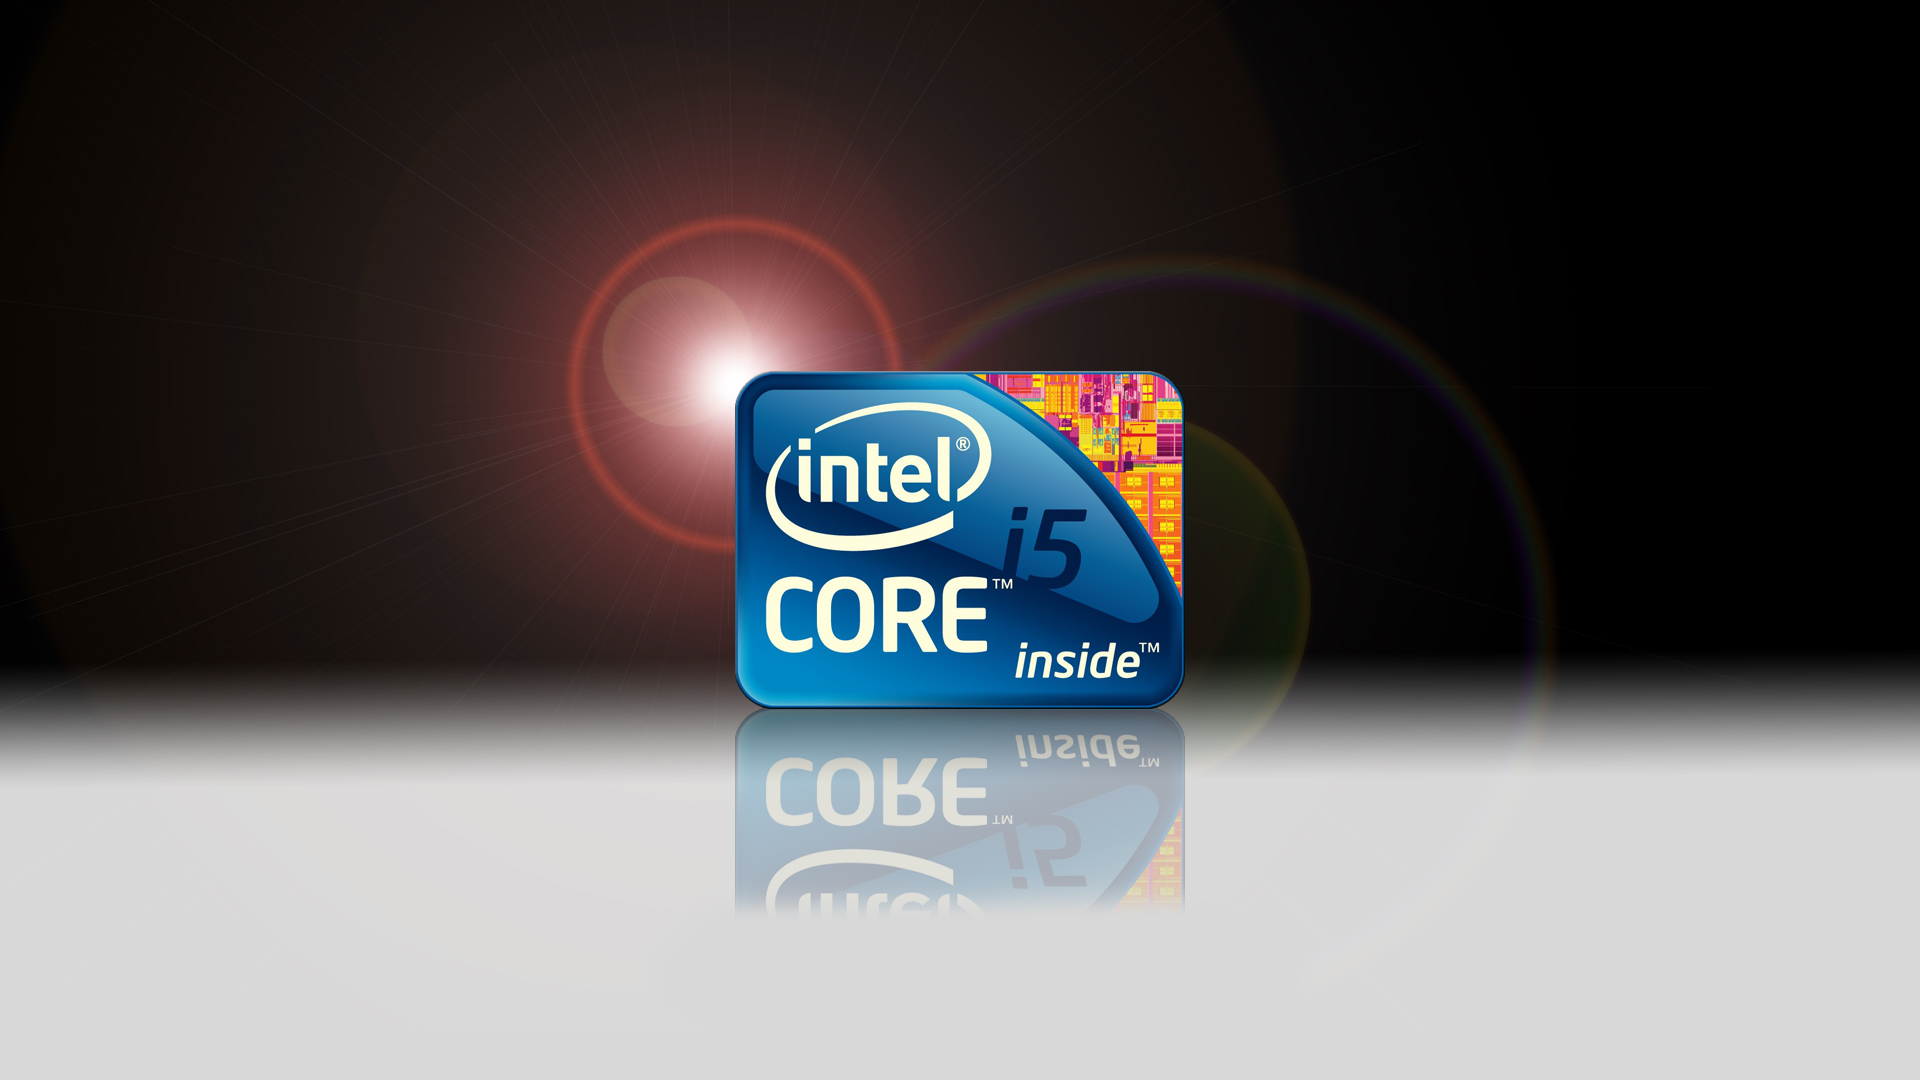 Intel Core i5 Computer Wallpapers Desktop Backgrounds 1920x1080